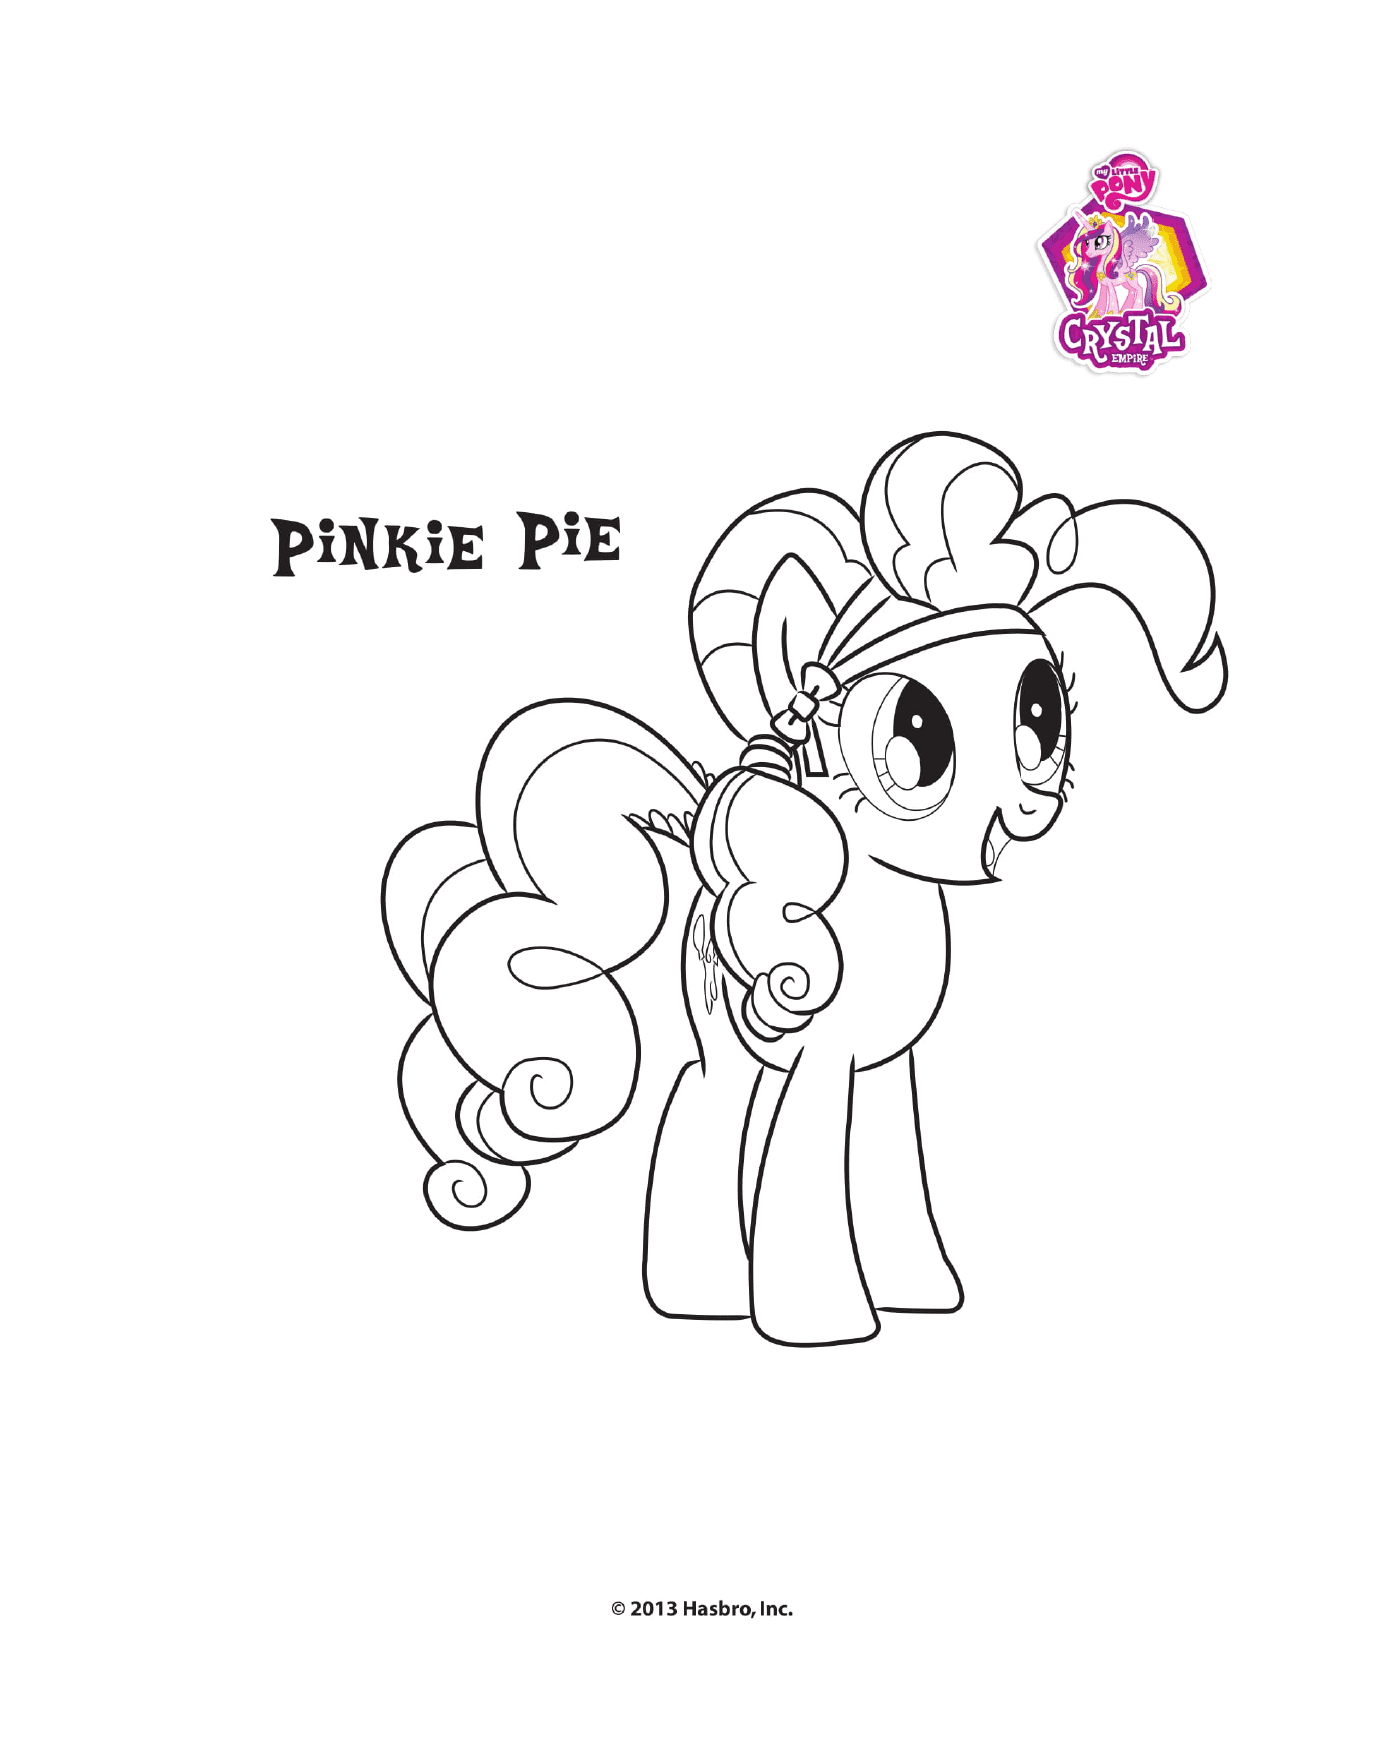  Pinkie Pie bei Crystal Empire 